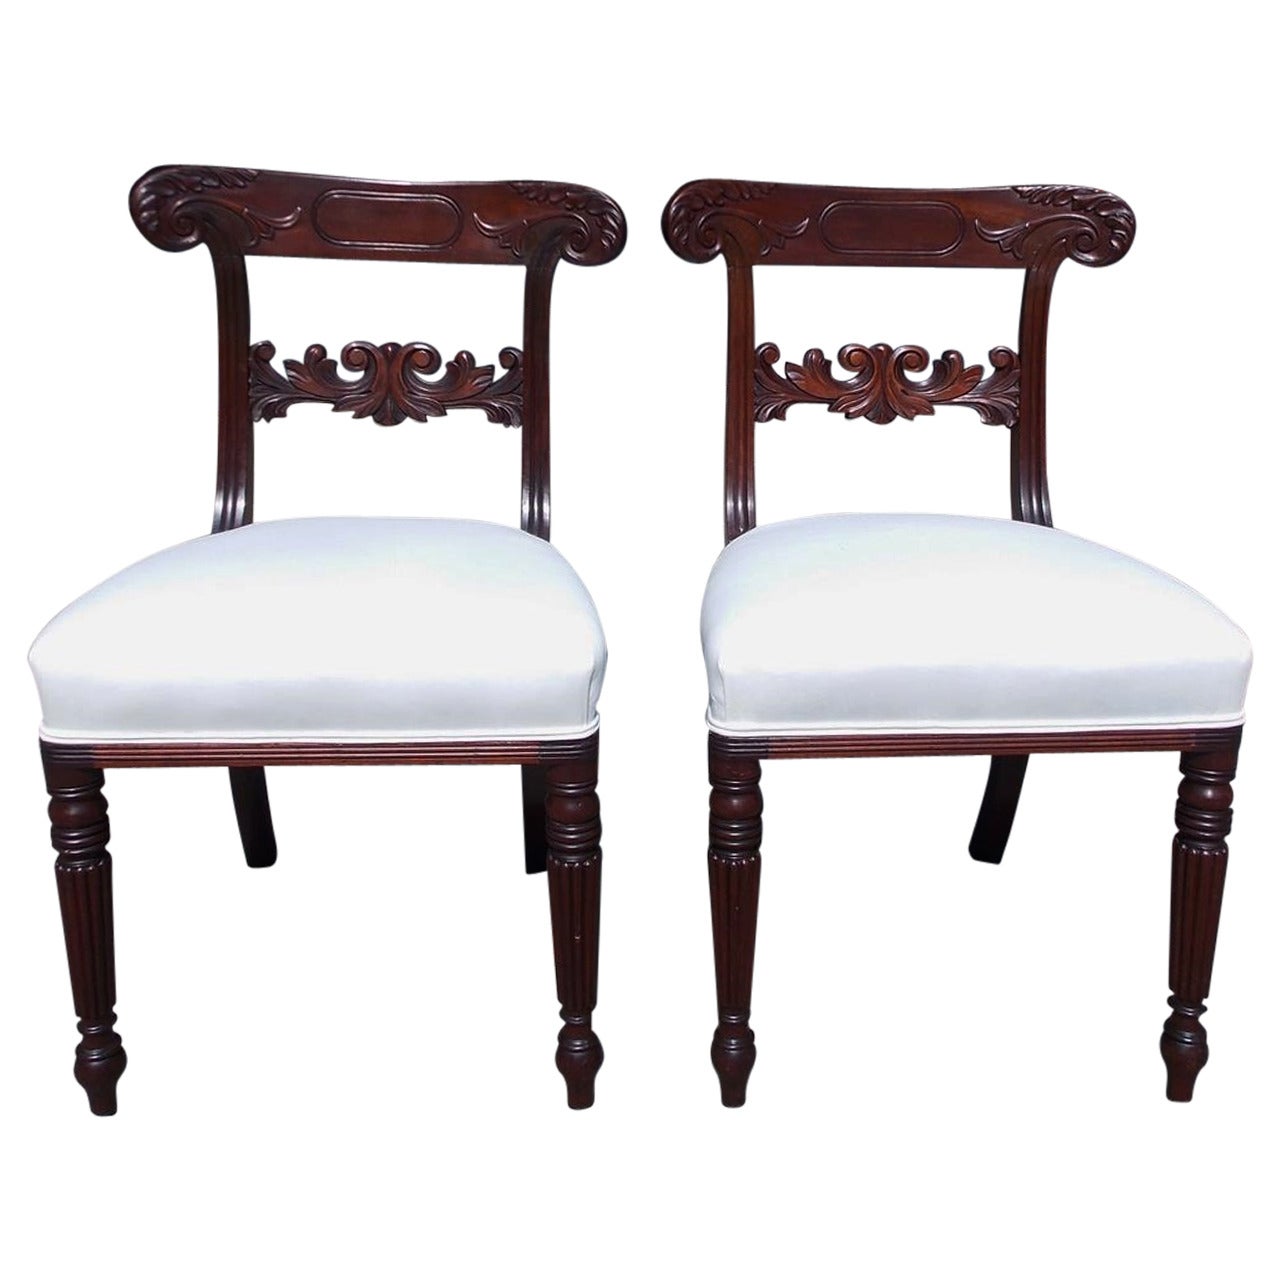 Pair of American Regency Mahogany Side Chairs, Baltimore, Circa 1815